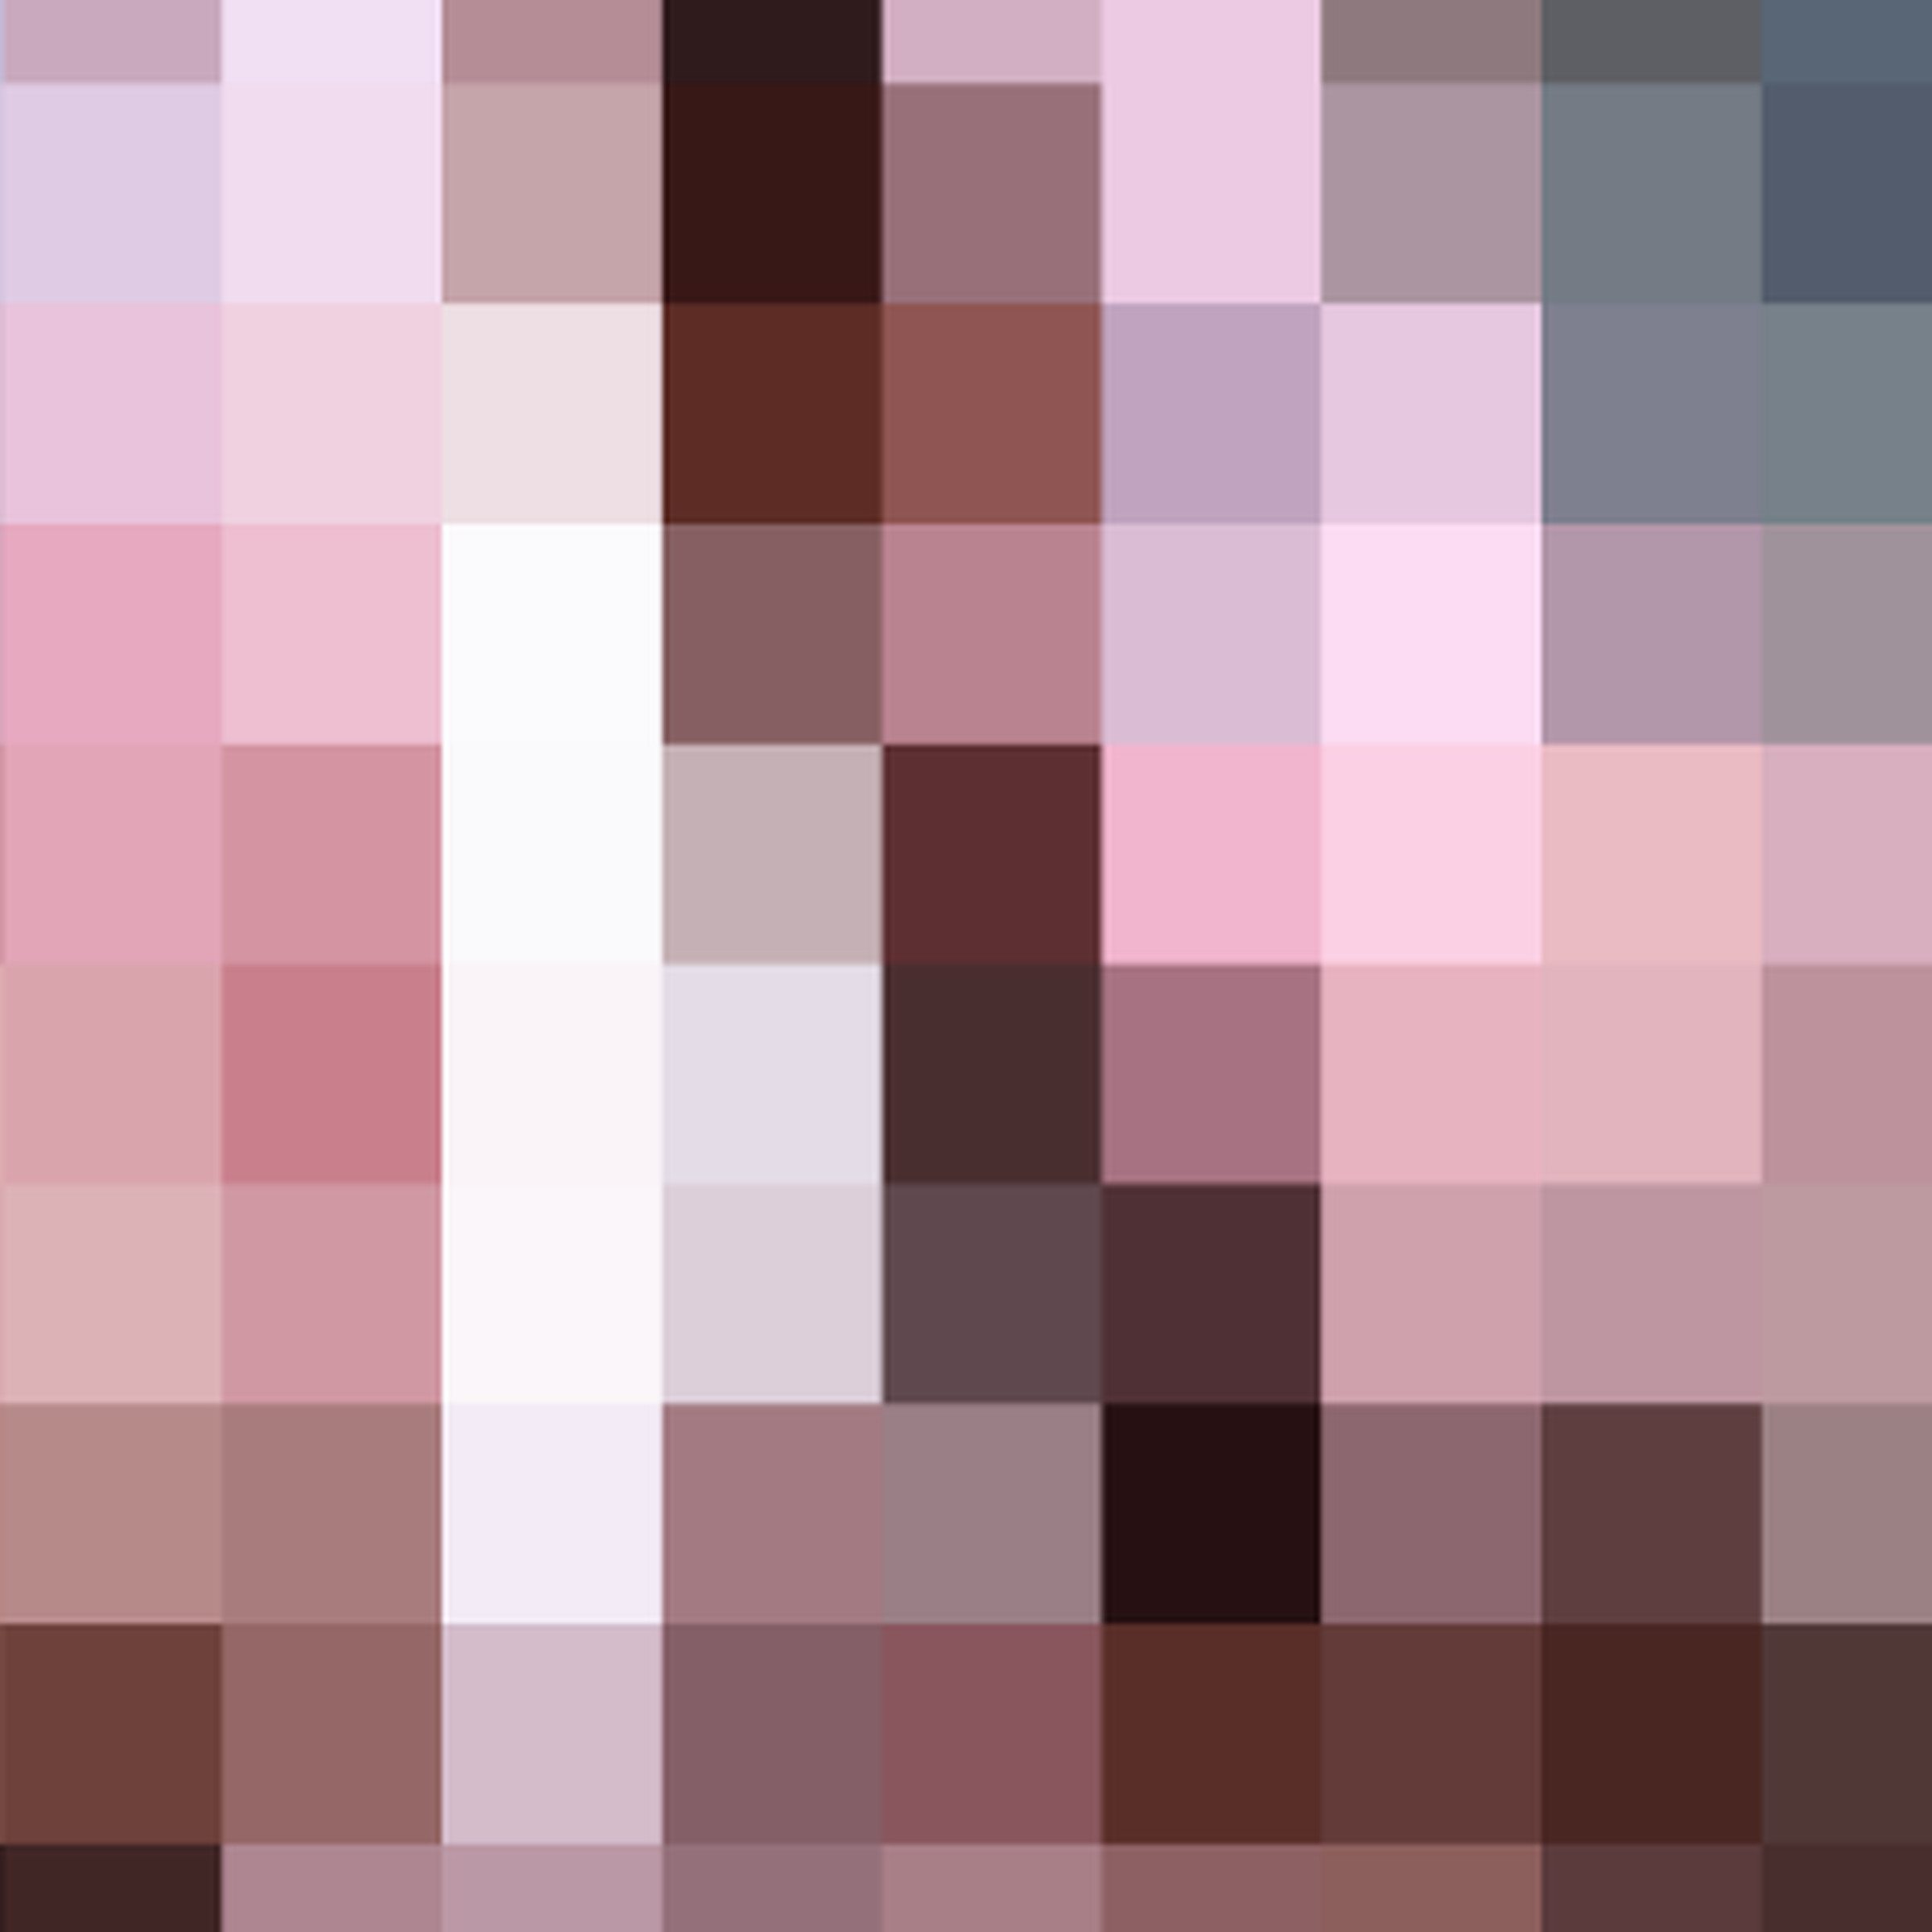 A blurred mosaic representing porn.